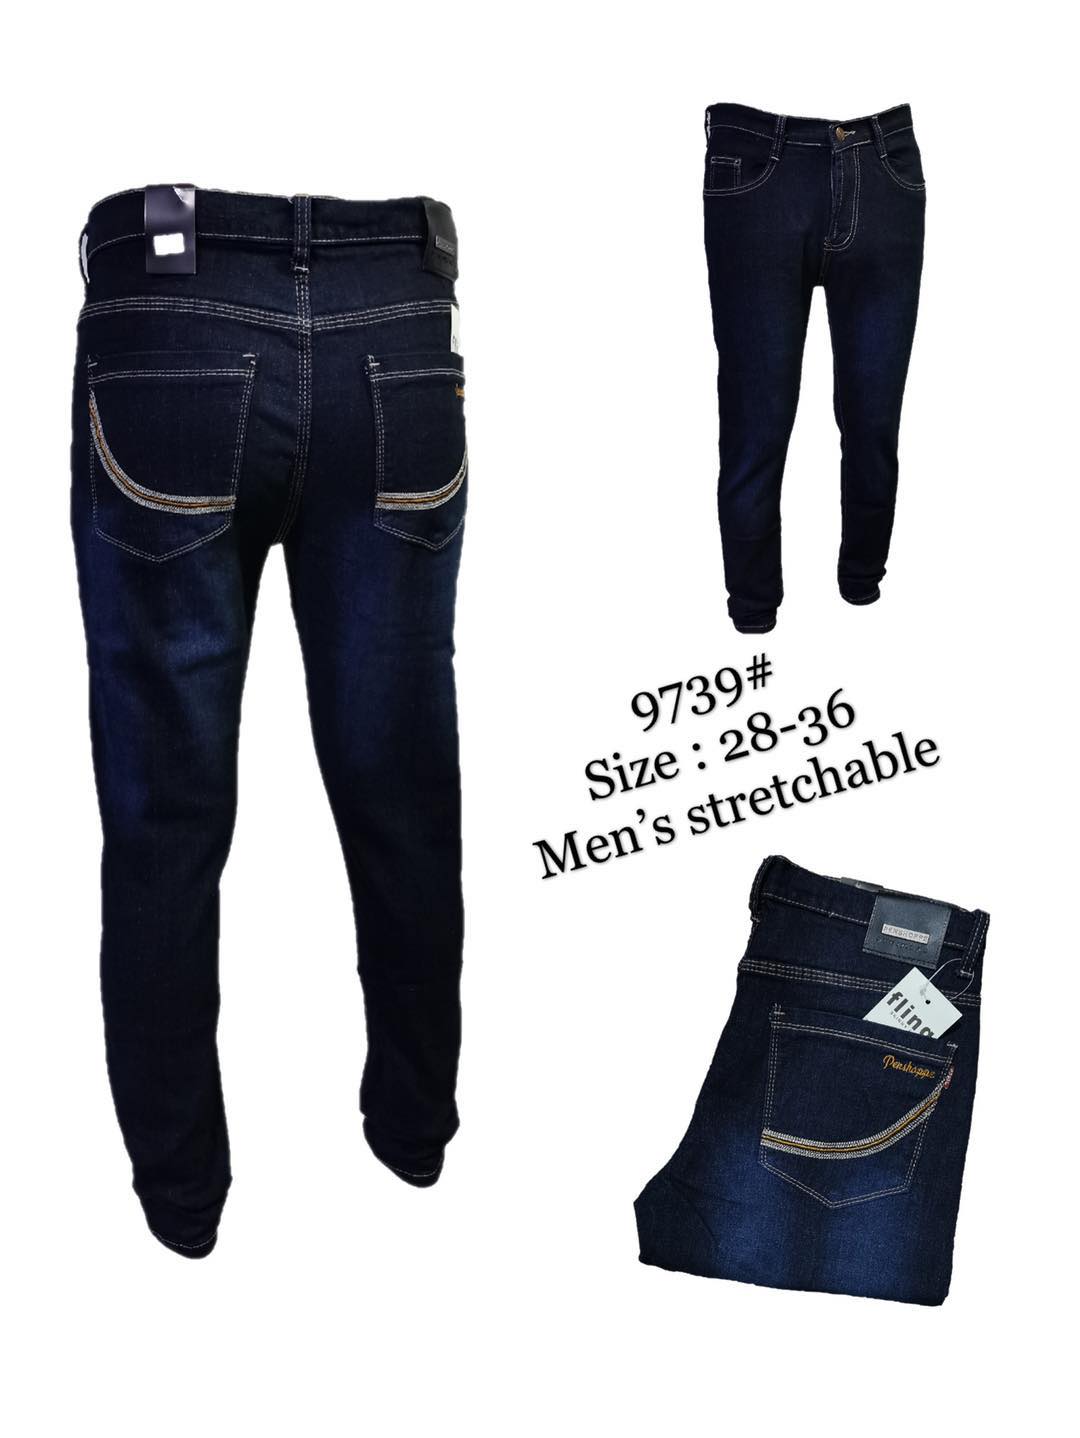 maong pants for men